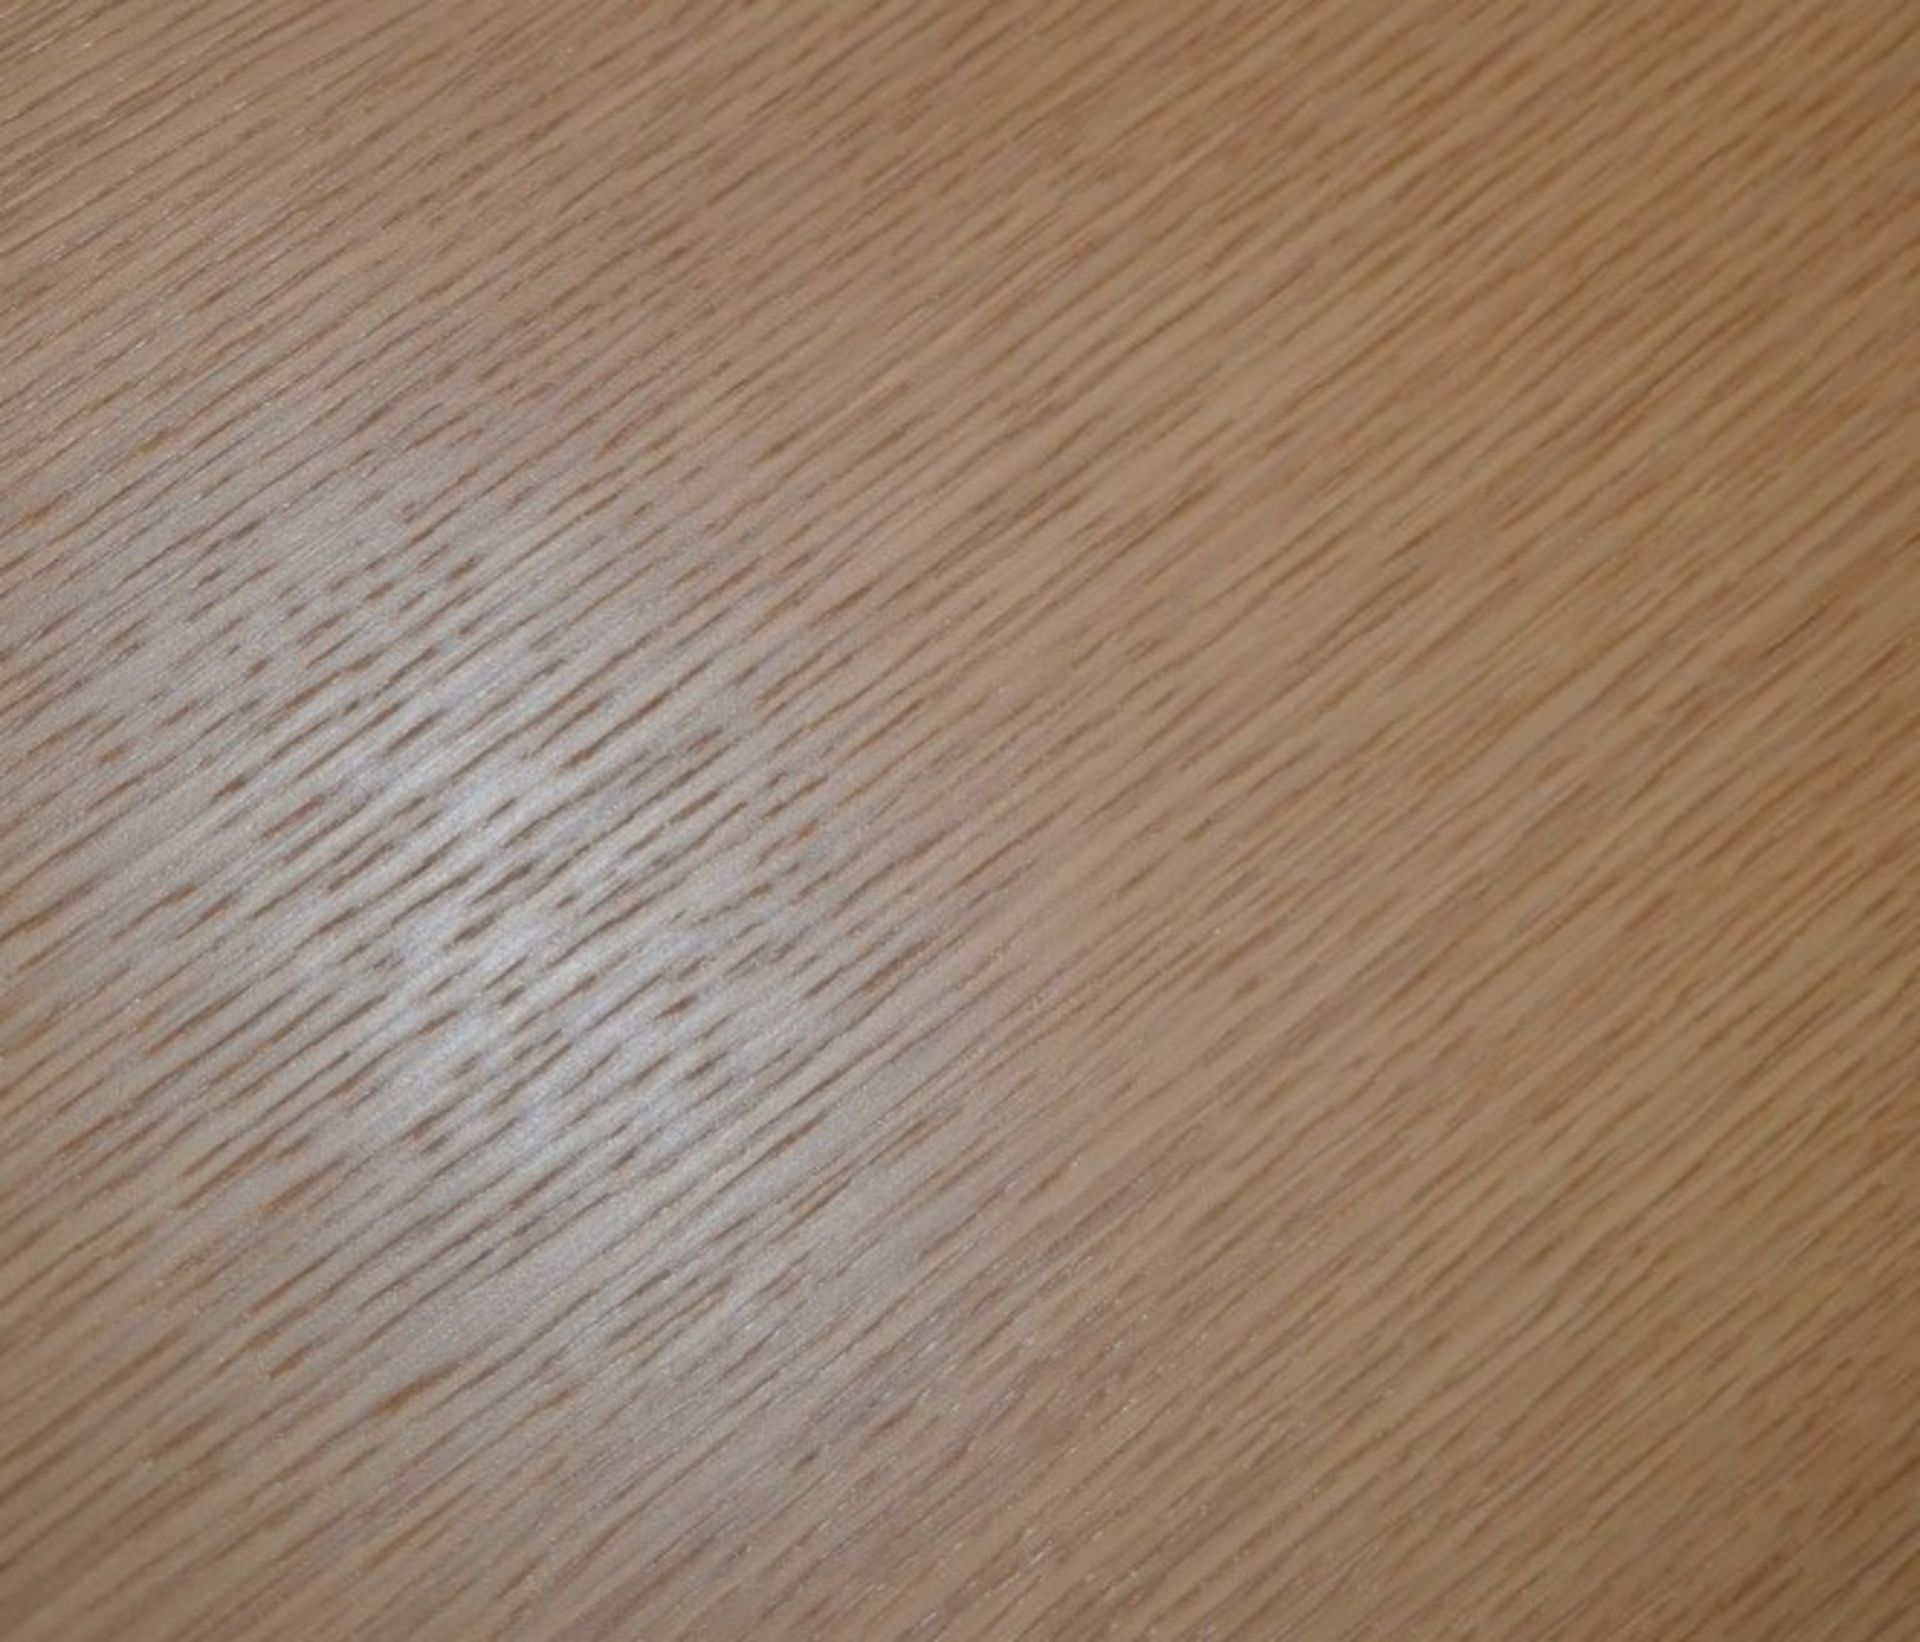 1 x Ligne Roset "Tolbiac" Wall Shelf With Oak Finish - Dimensions: 120 x 31 x 5cm - Ref: 5001009 - - Image 3 of 5